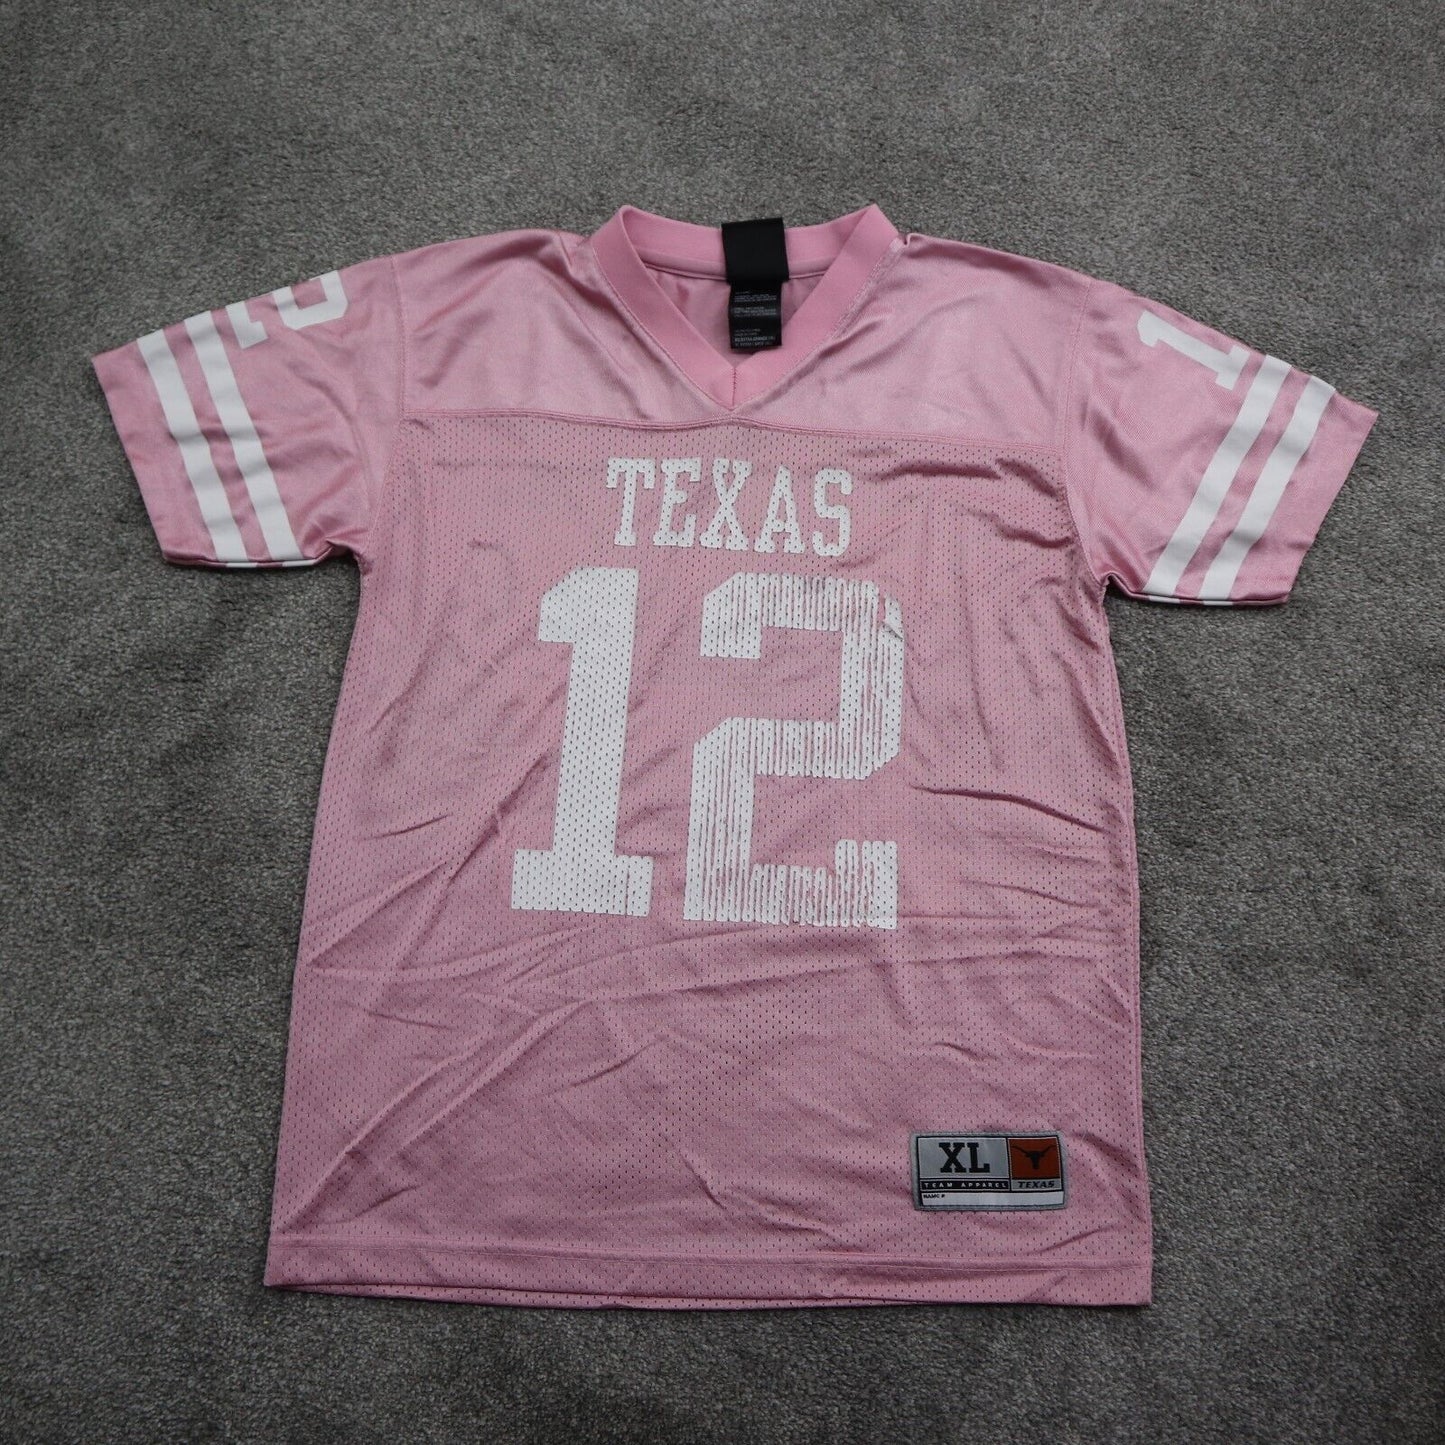 Texas Team Apparel Womens T-Shirt Pullover Short Sleeves V Neck Peach Size XL